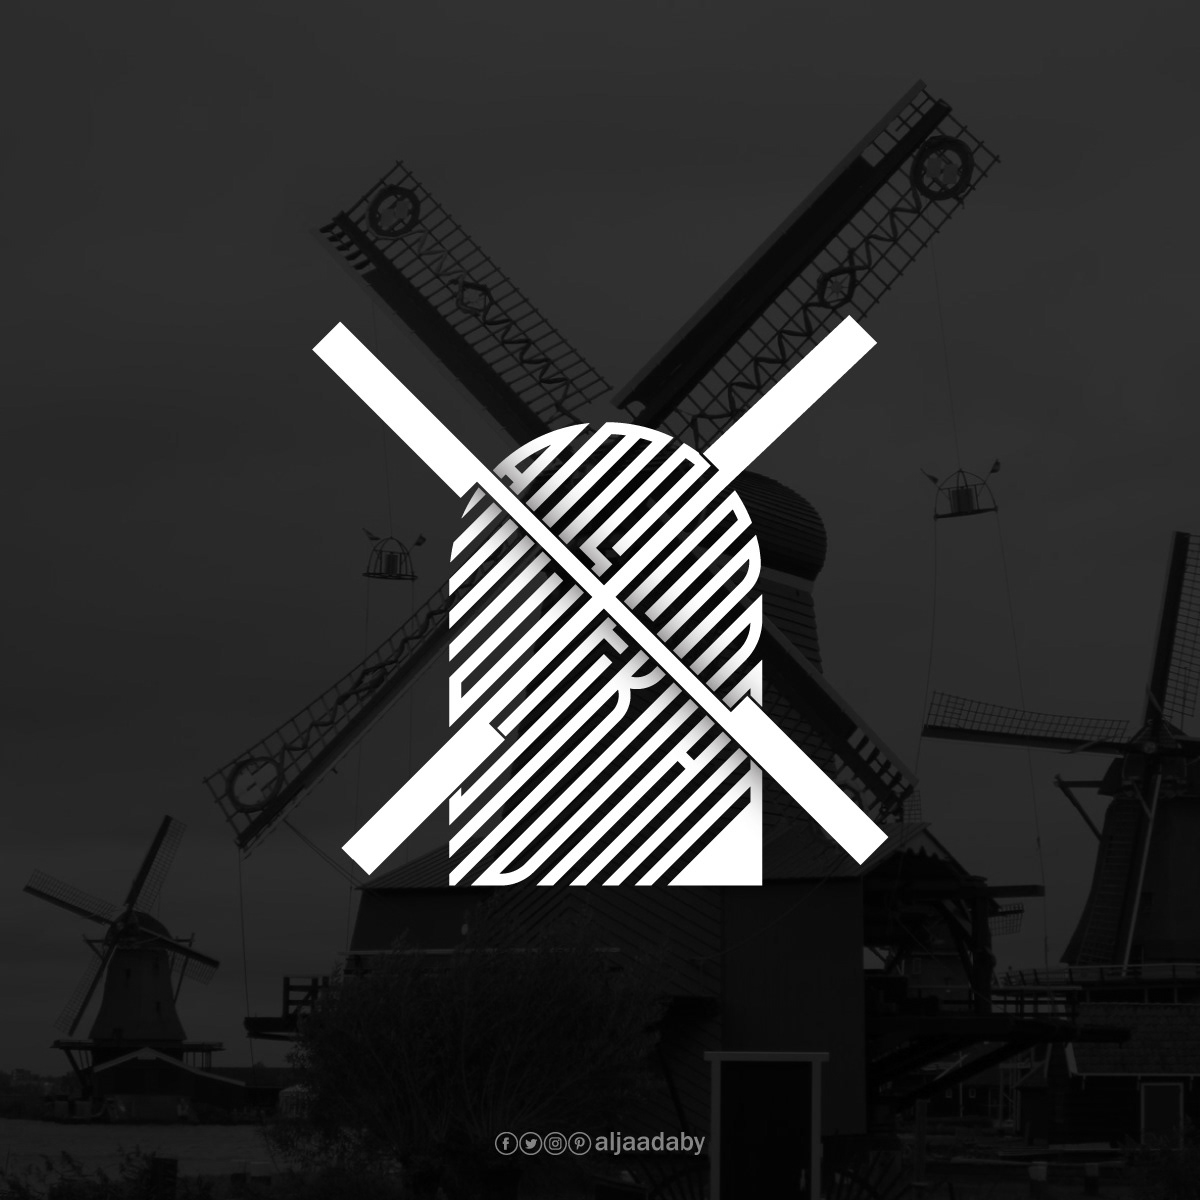 Typographic city logos based on their famous landmarks - Amsterdam